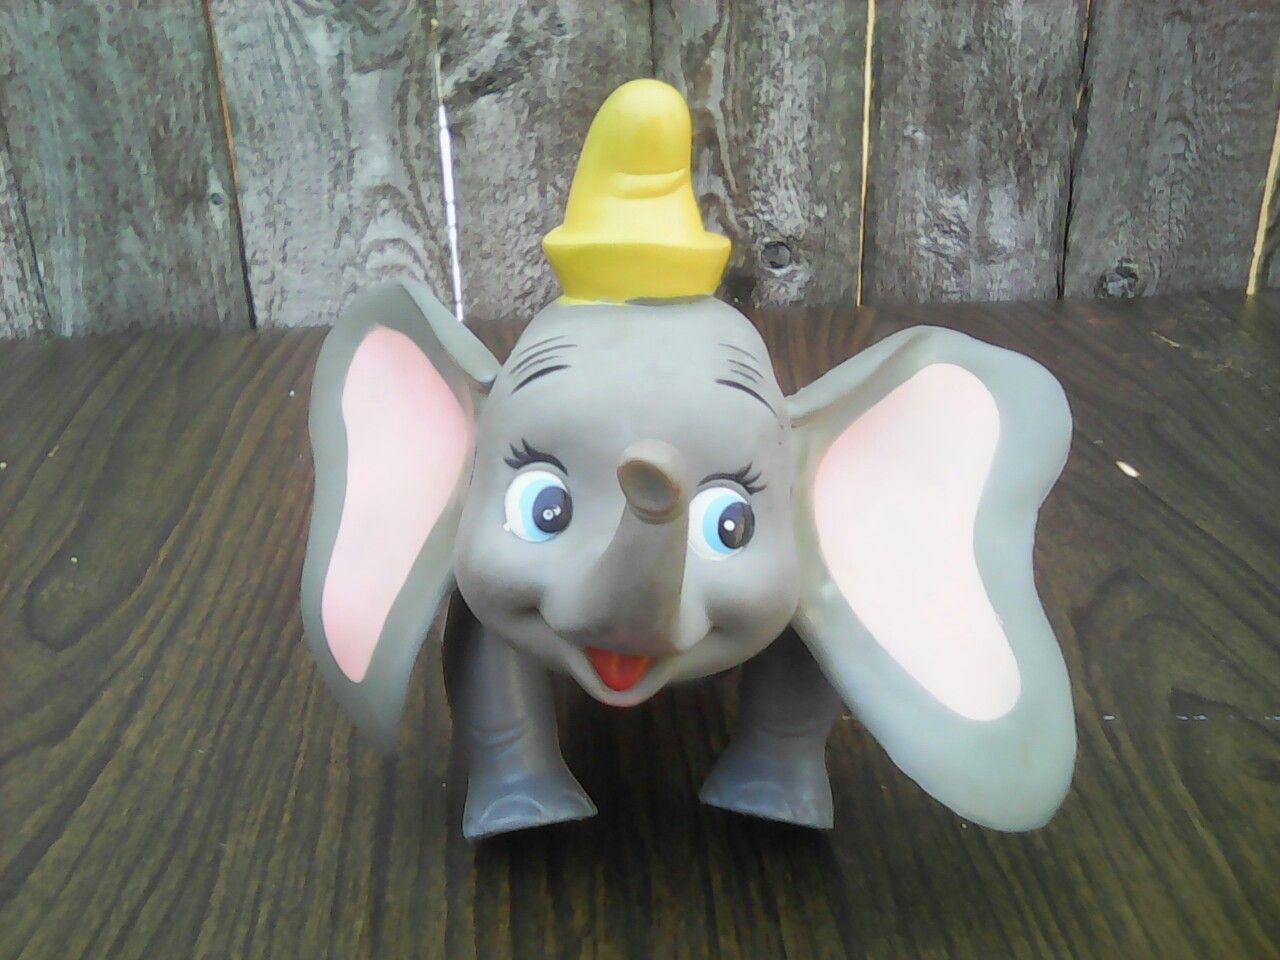 Vintage Walt Disney Dumbo elephant figure toy